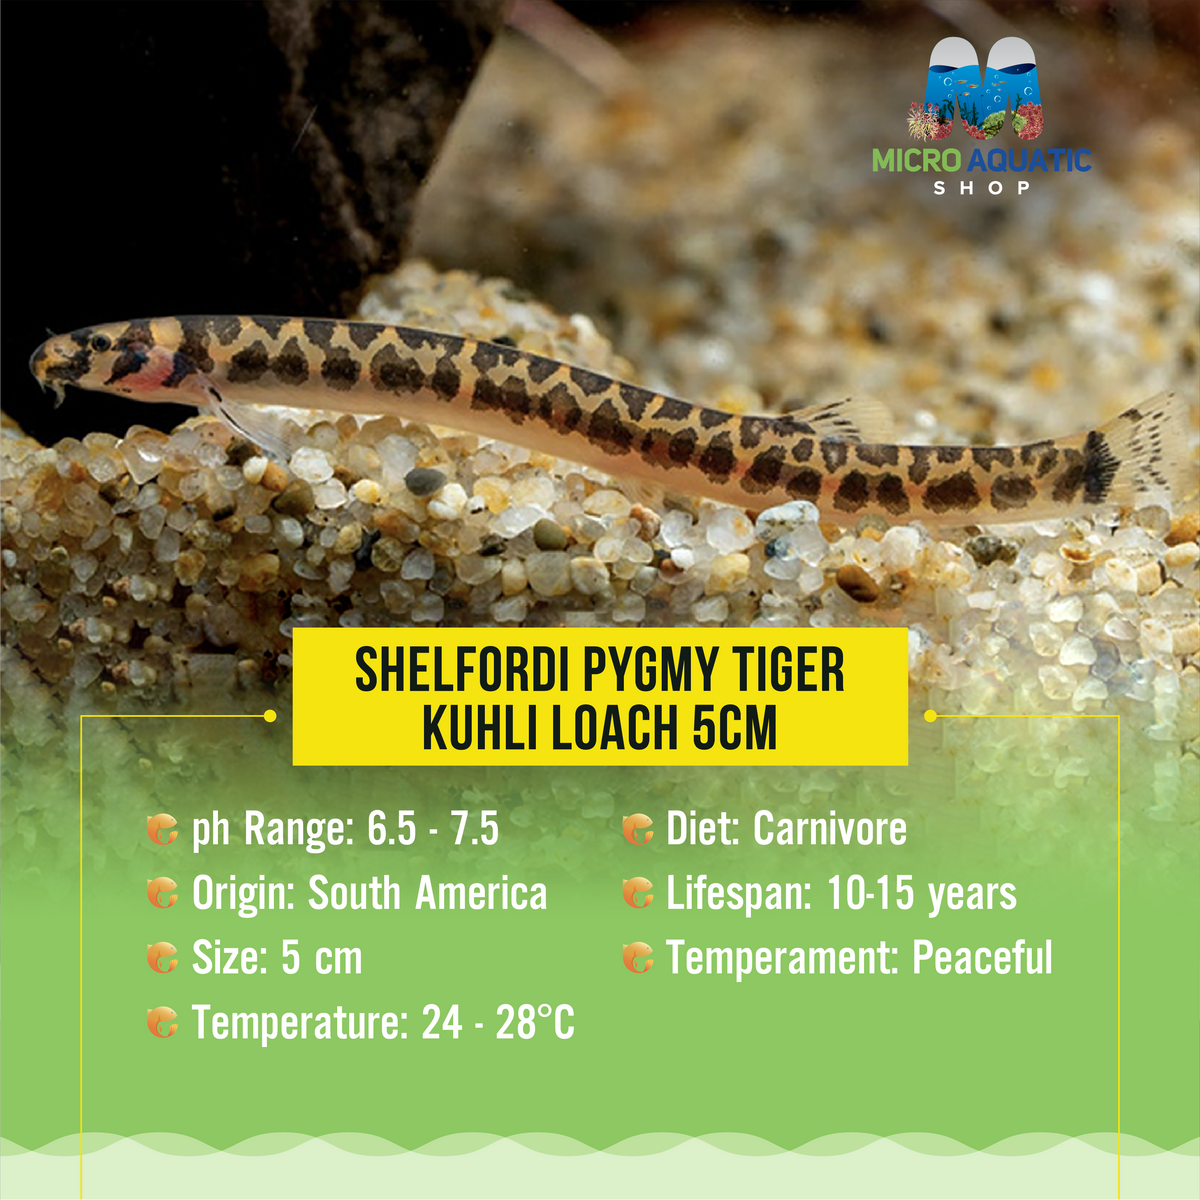 Shelfordi Pygmy Tiger Kuhli Loach 5cm